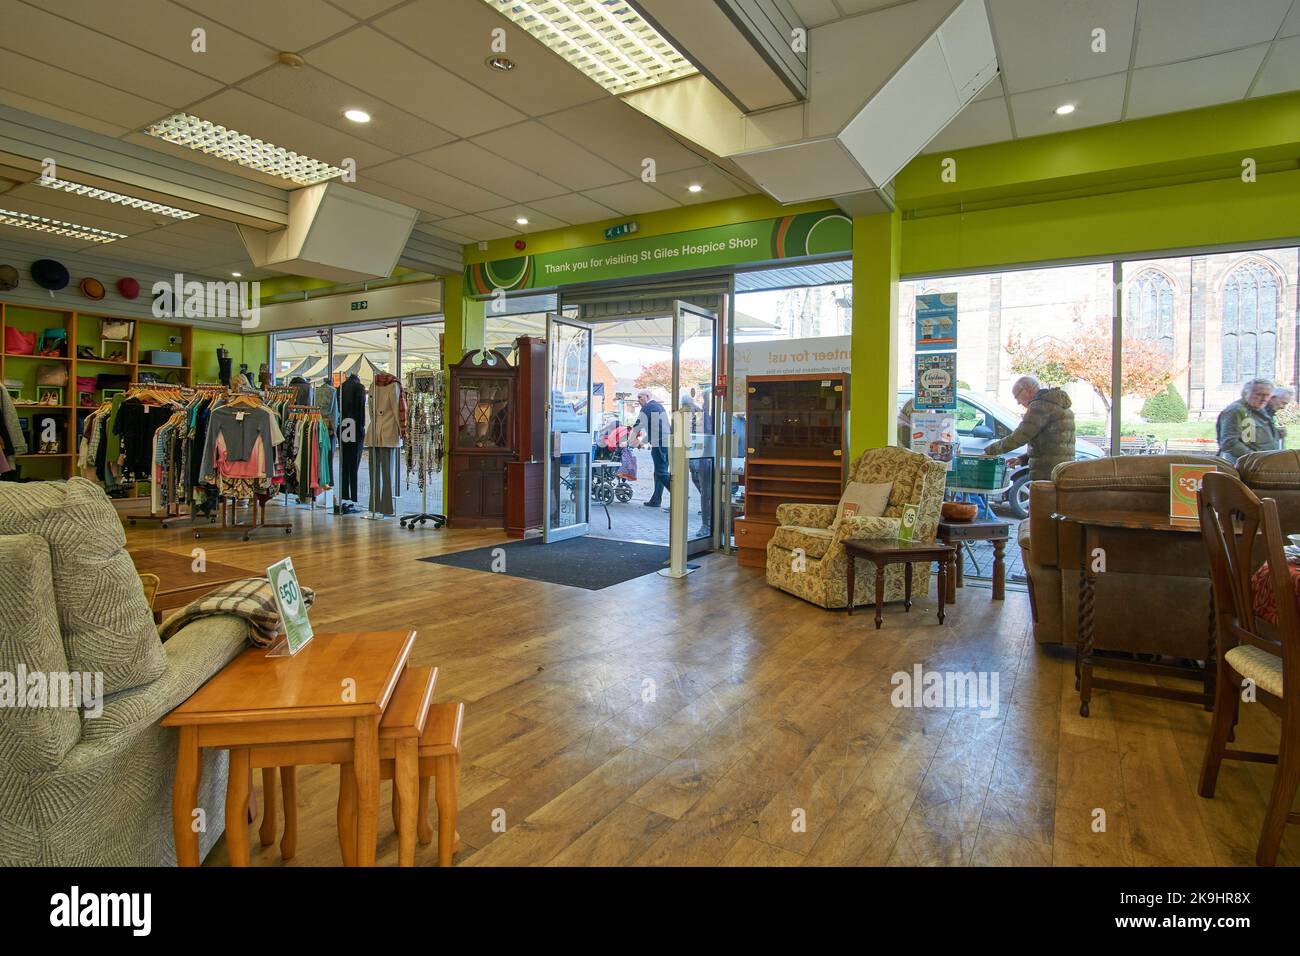 Chrity shop interior in Tamworth, UK Stock Photo